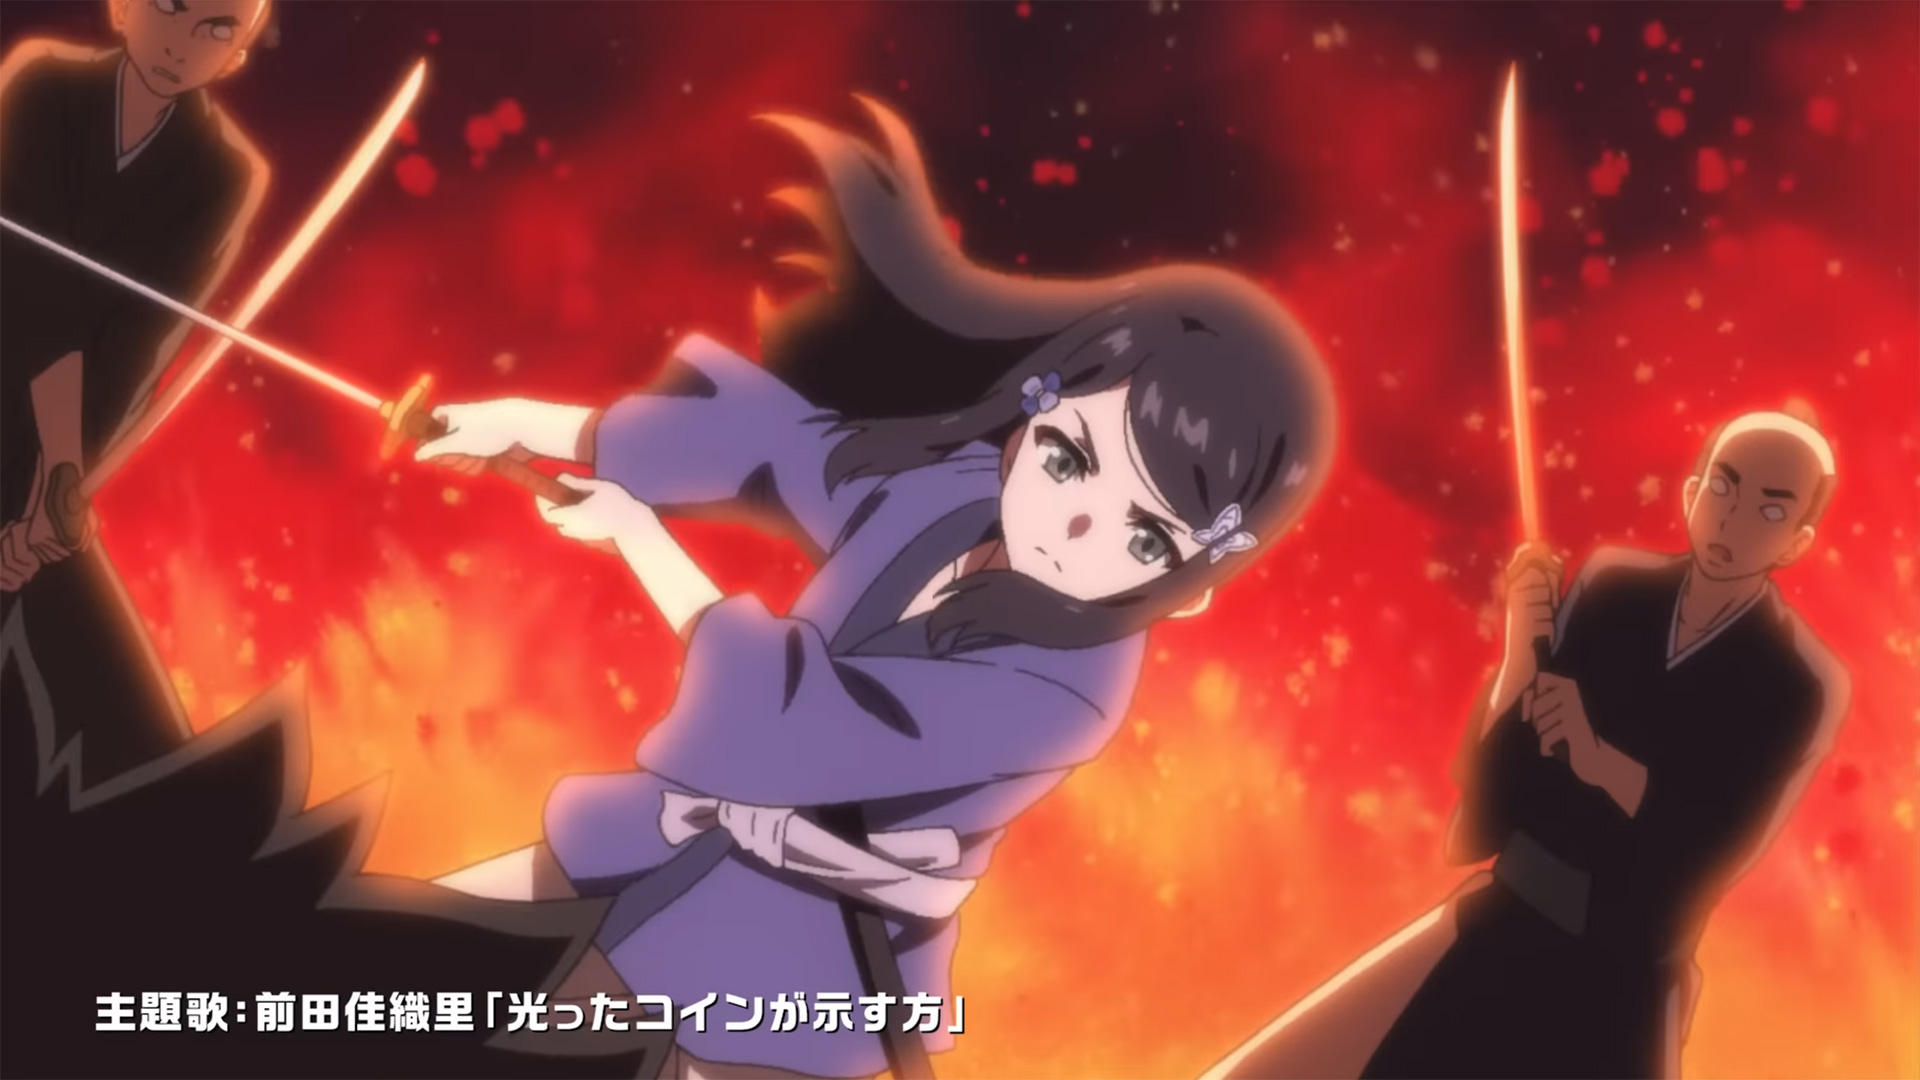 Assistir Rougo ni Sonaete Isekai de 8-manmai no Kinka wo Tamemasu Episódio  11 » Anime TV Online